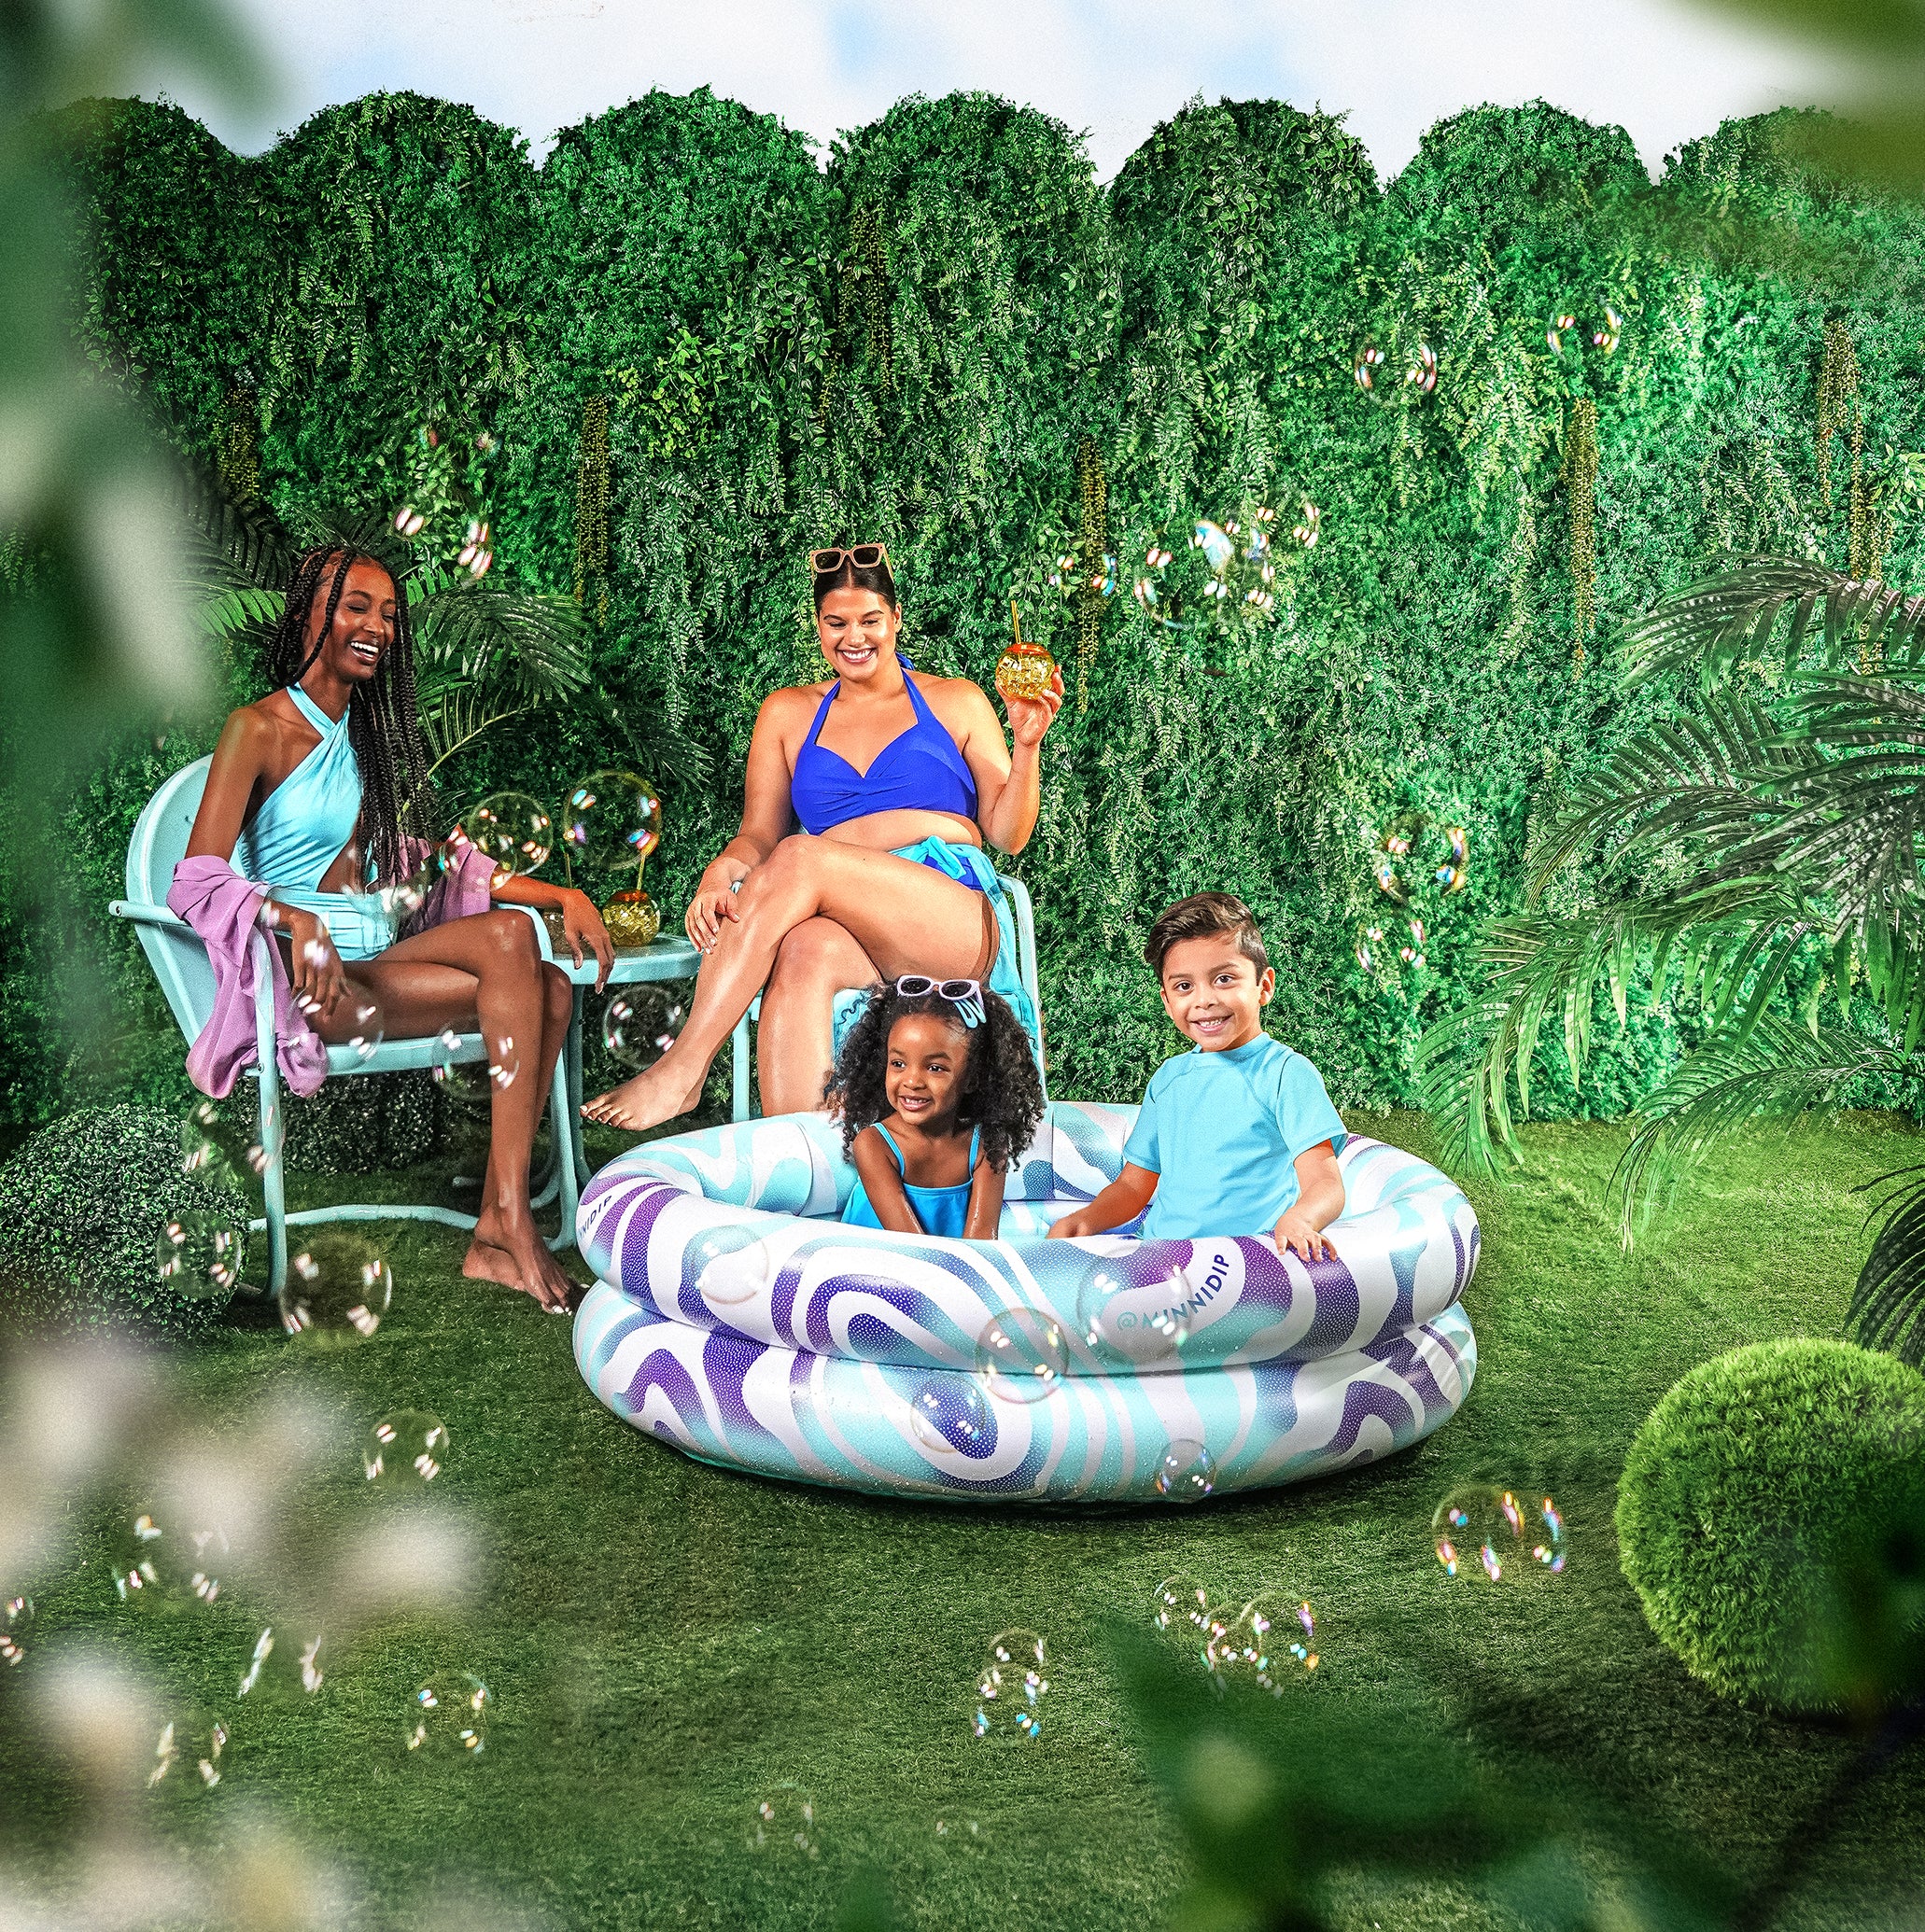 the GRADIENT SPLASH MINNI-MINNI luxe inflatable pool